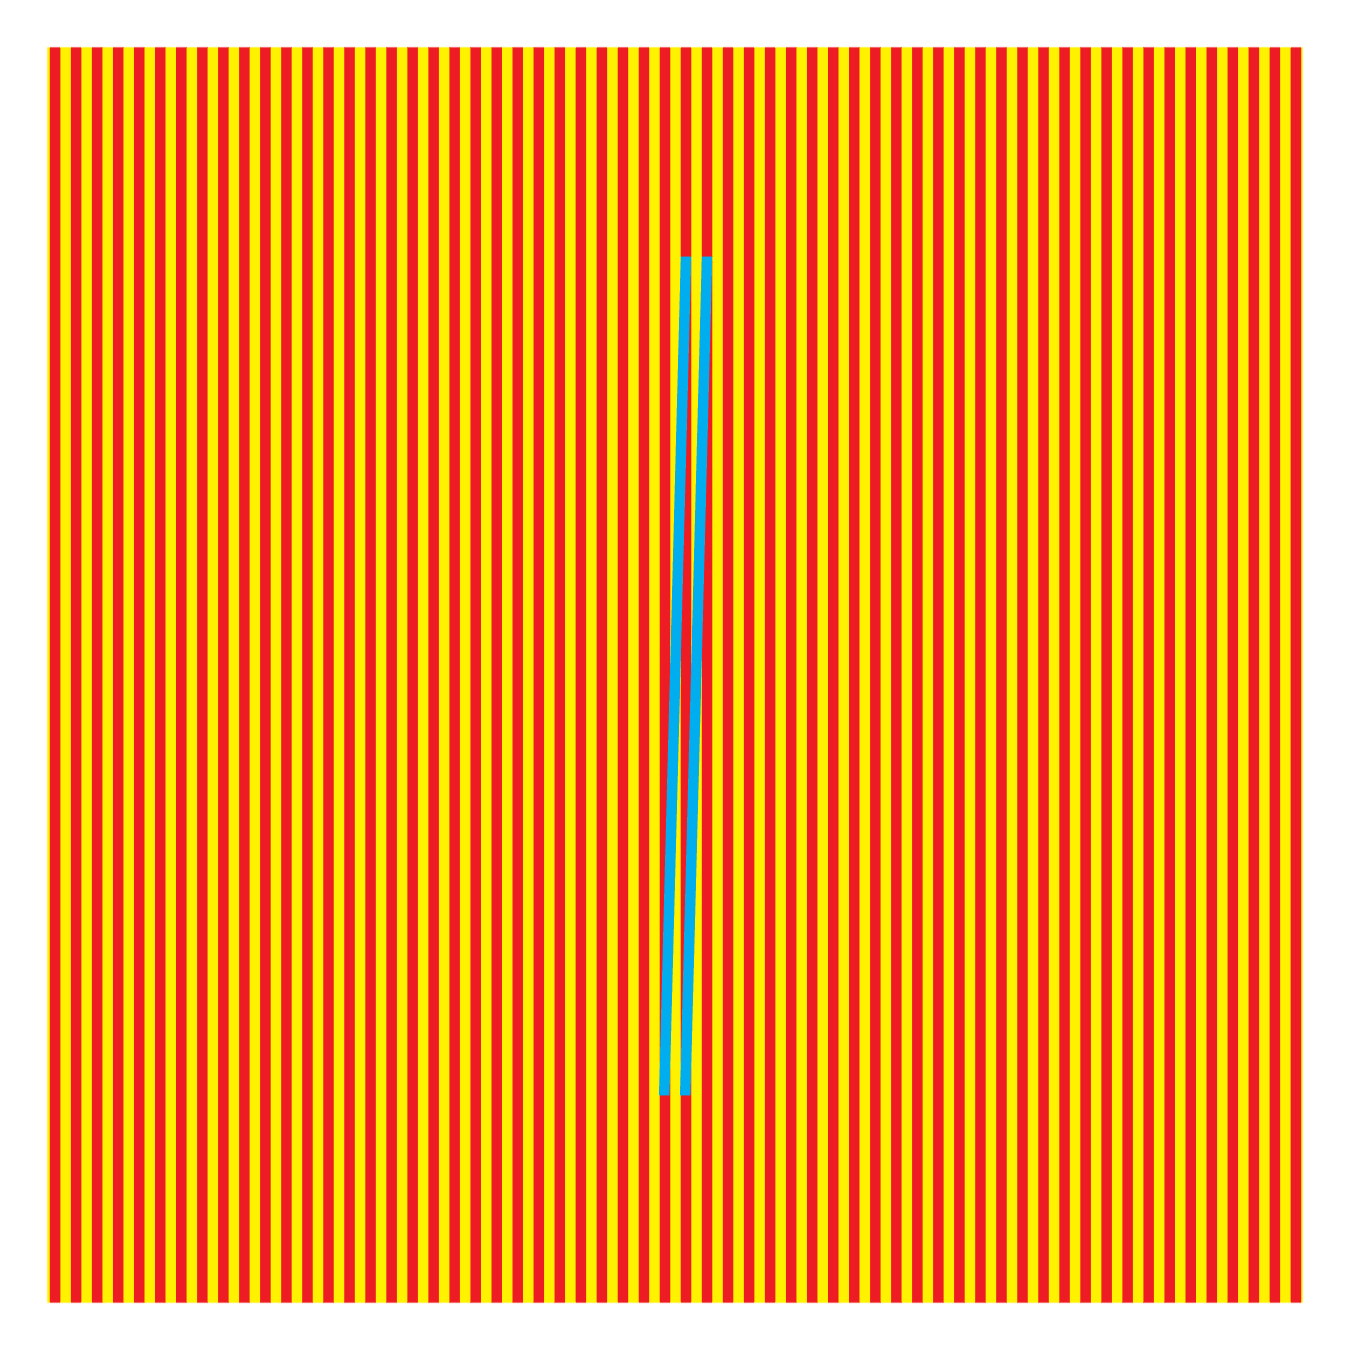 Interactive colors, Tow lines spectrum 3